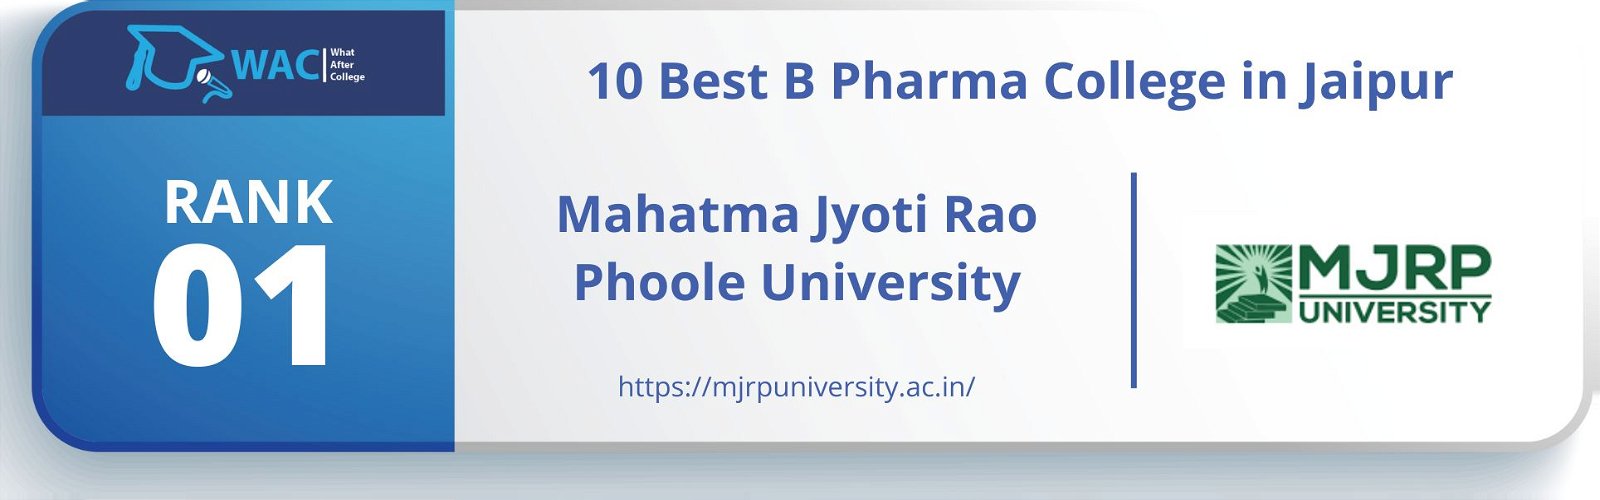 b pharma college in jaipur